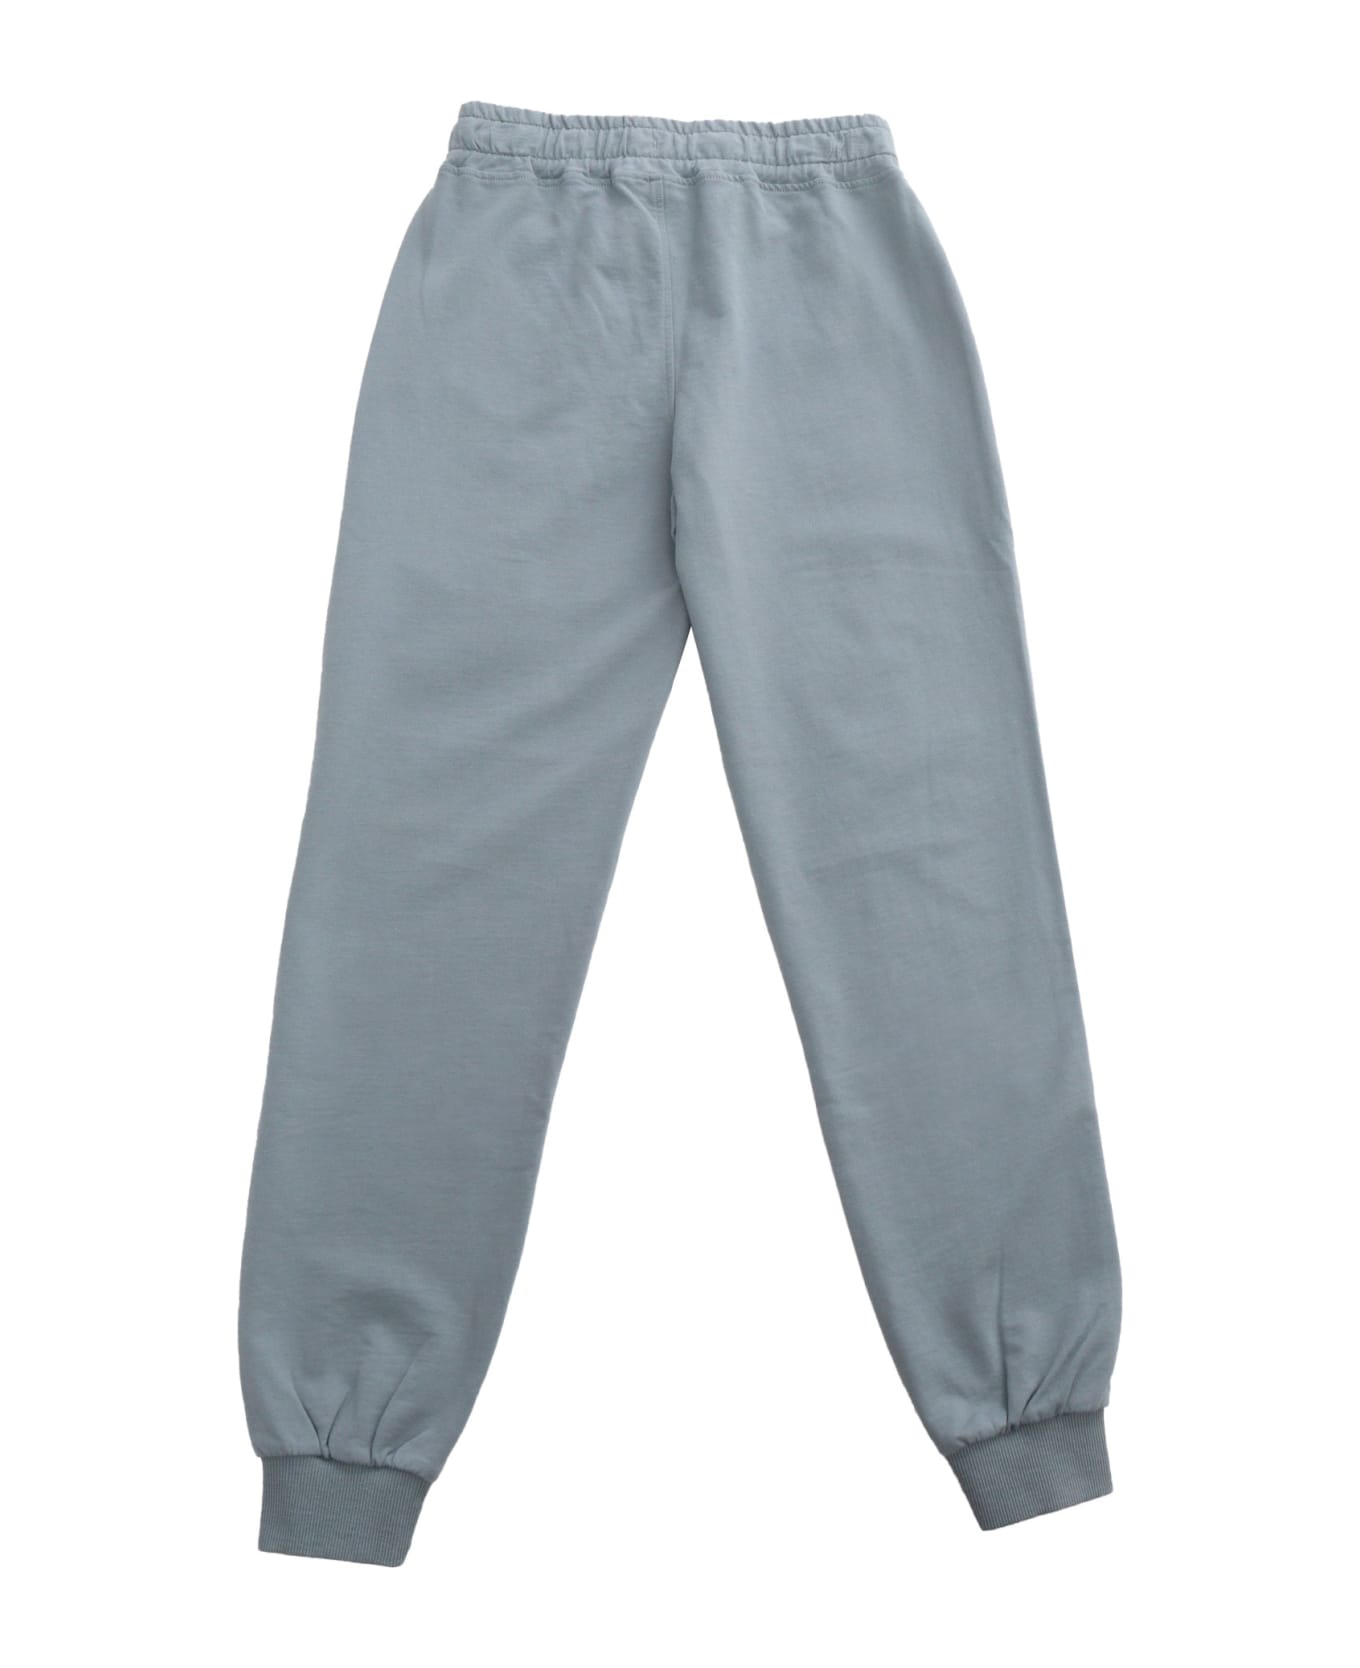 C.P. Company Undersixteen Grey Jogging Pants - GREY ボトムス